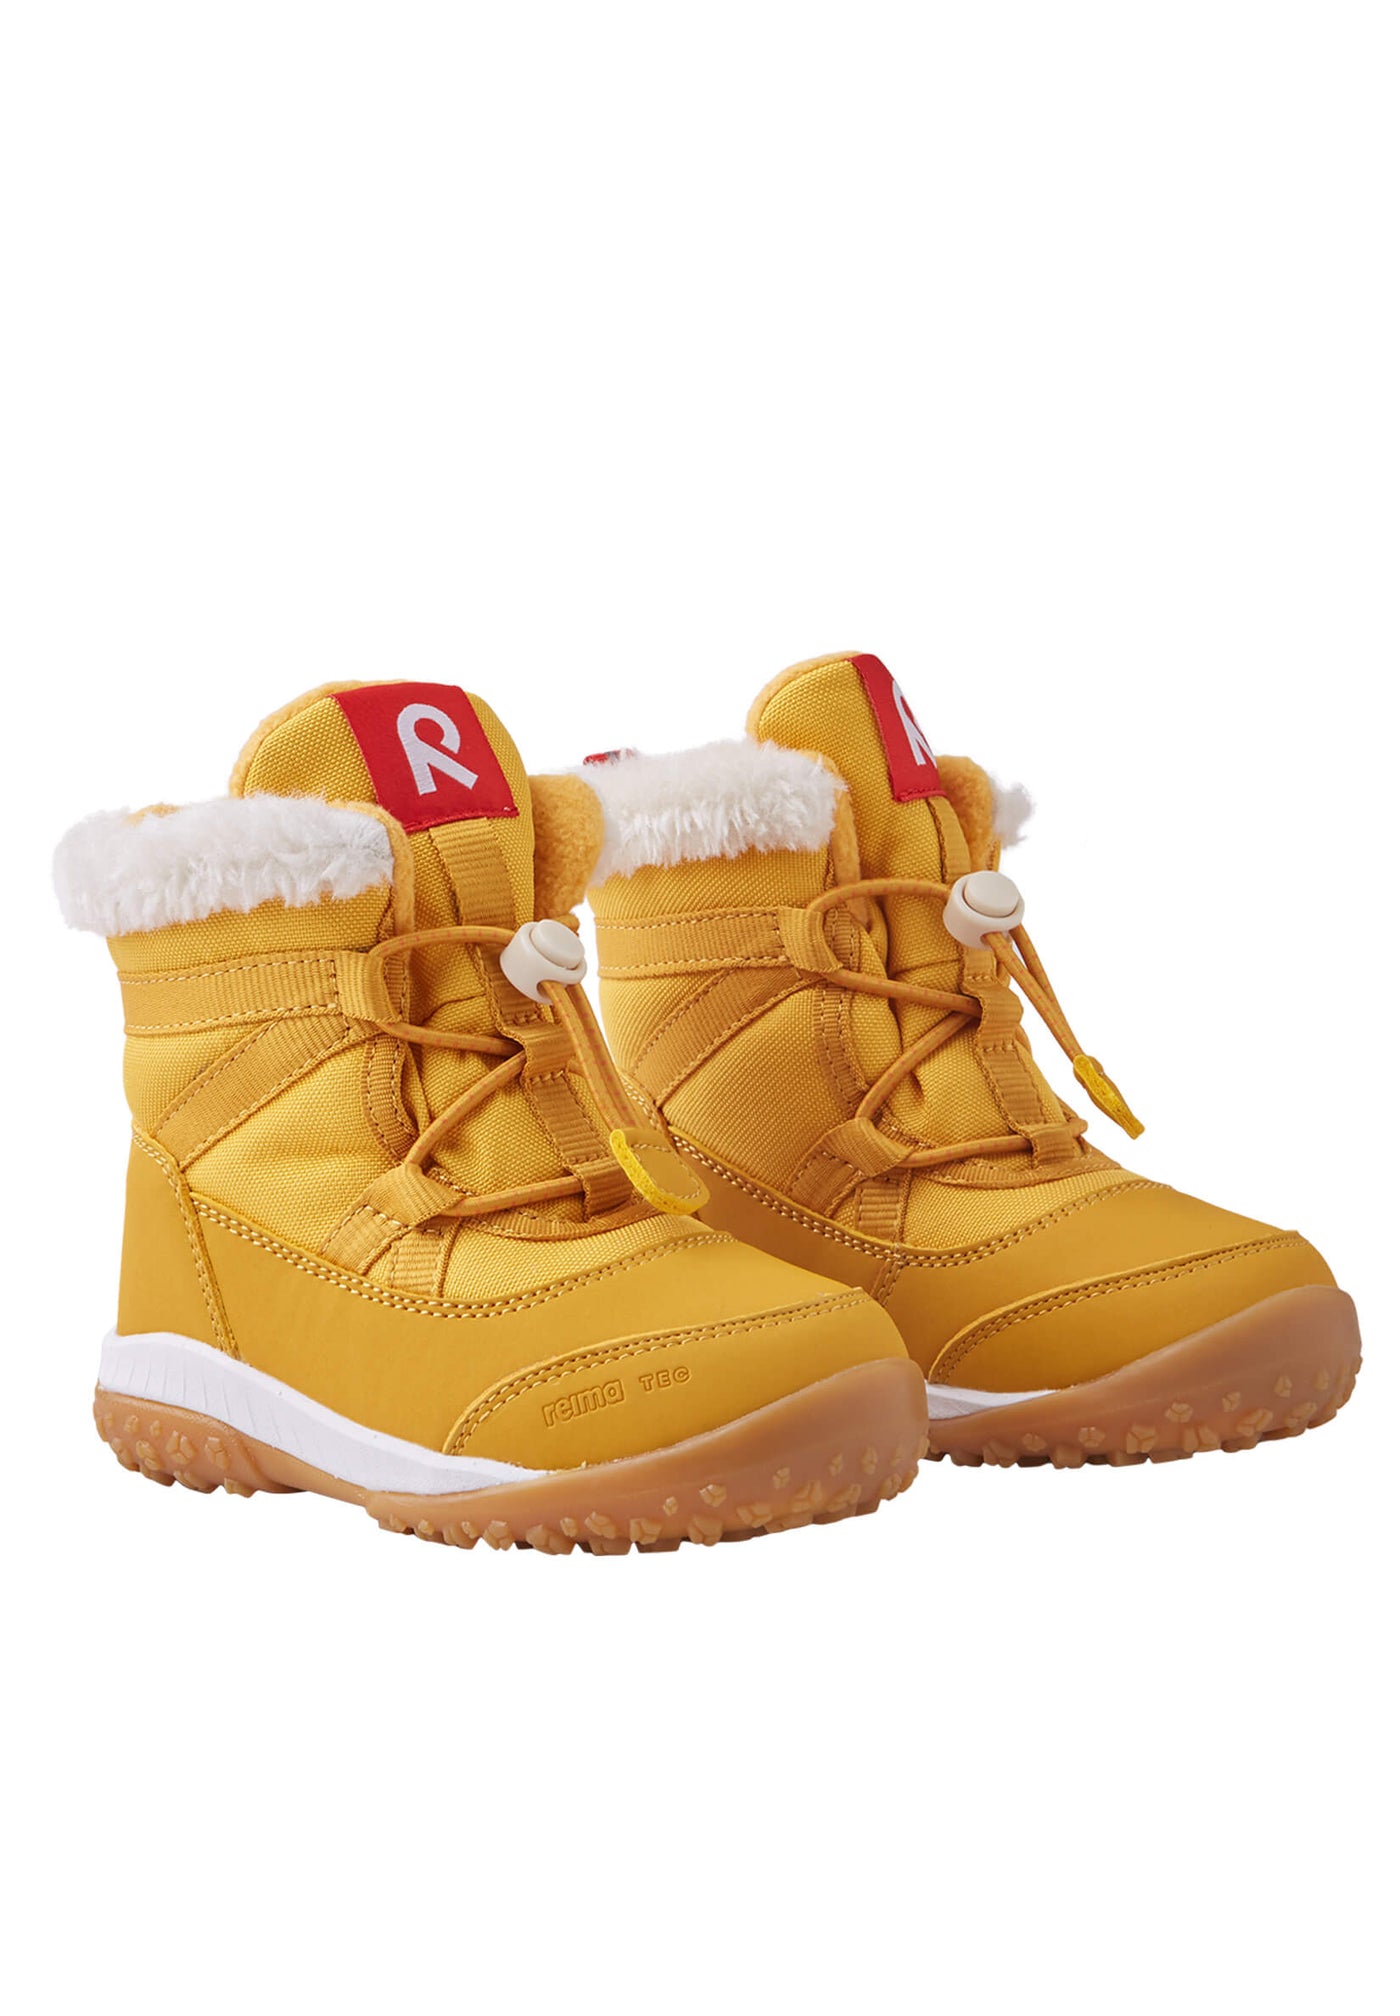 Reima Samooja Waterproof Kids Snow Boots